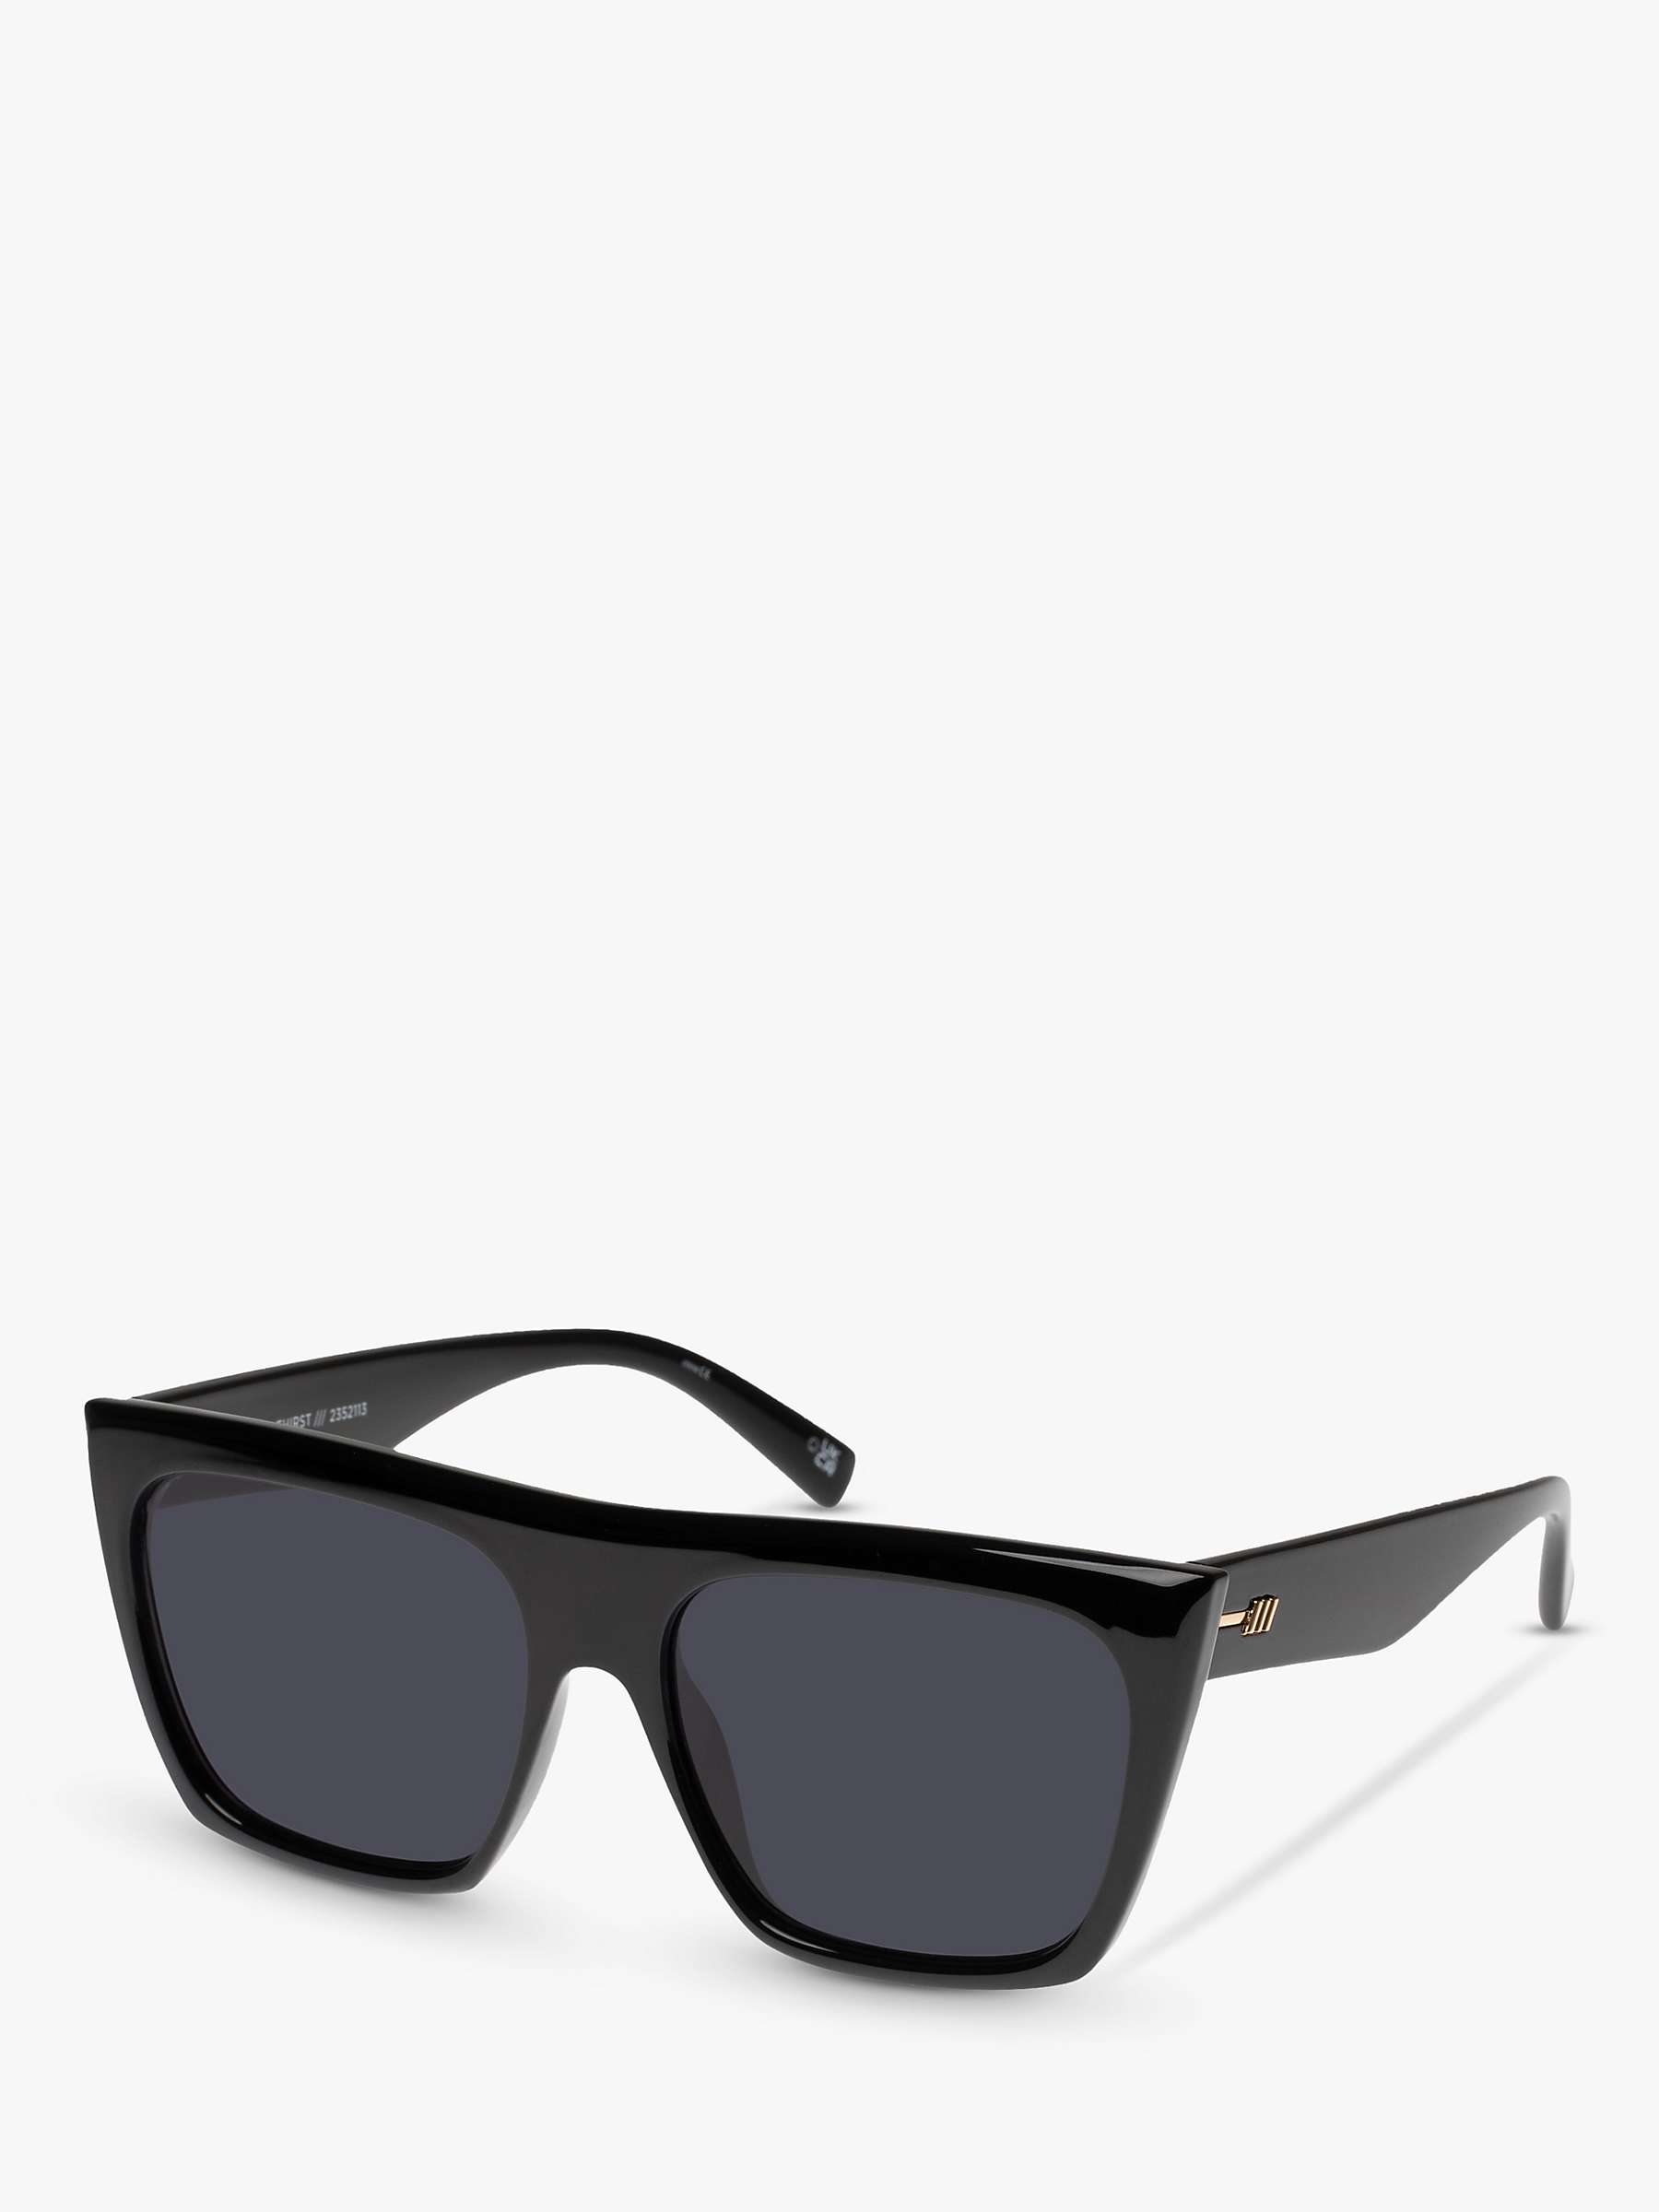 Buy Le Specs L5000185 Women's The Thirst D-Frame Sunglasses, Black/Grey Online at johnlewis.com